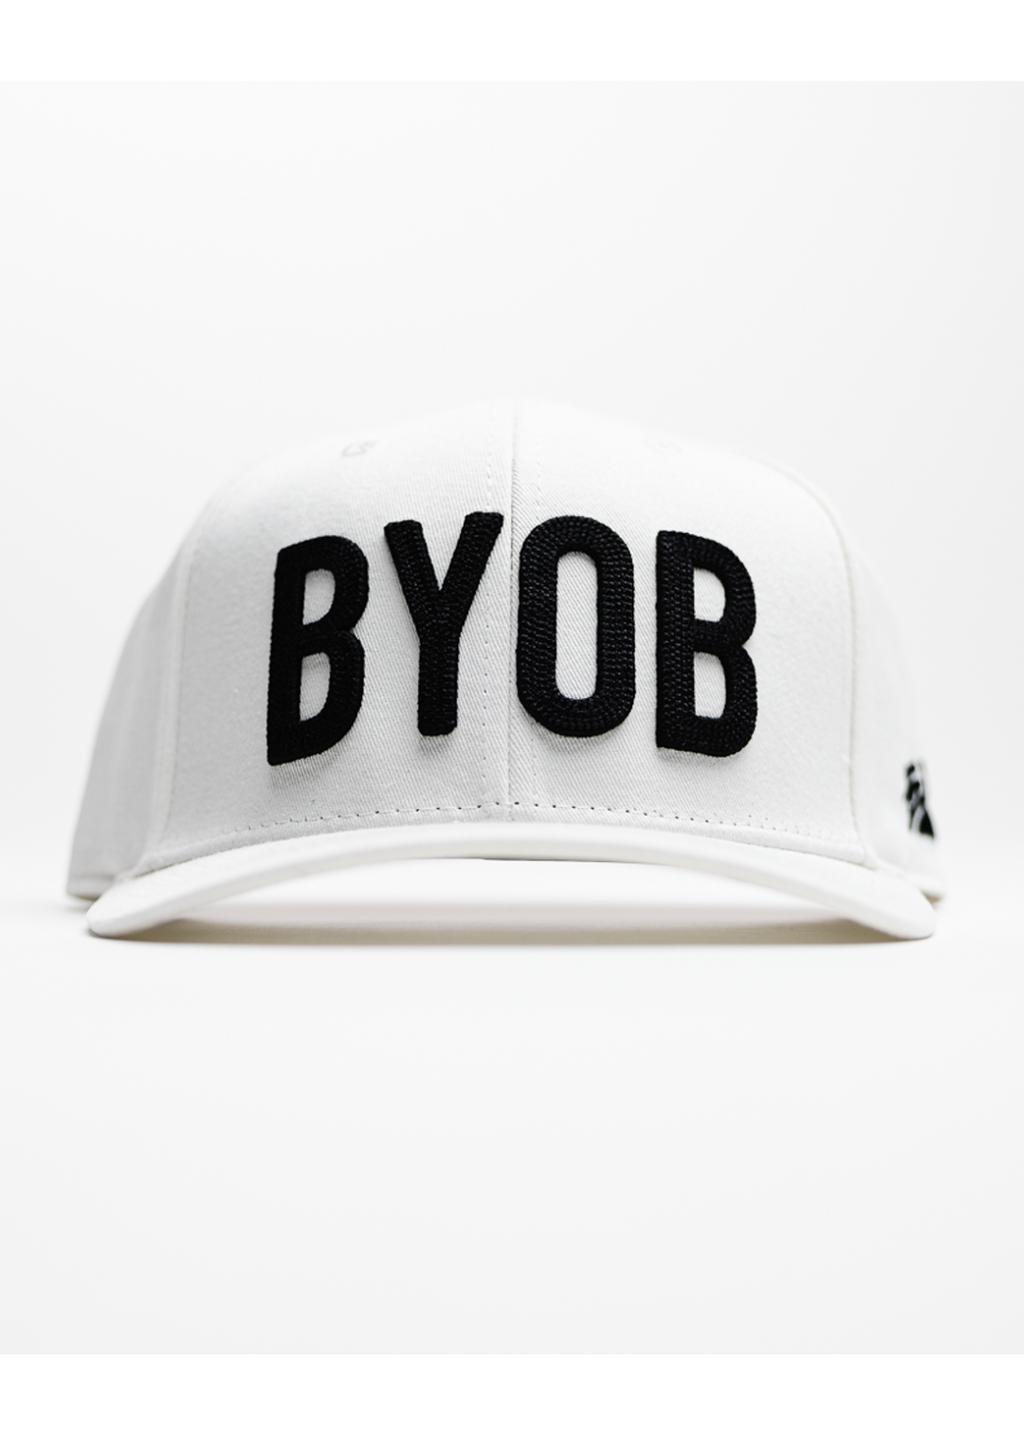 MyGolfSpy "BYOB" Stitch Hat | LIMITED